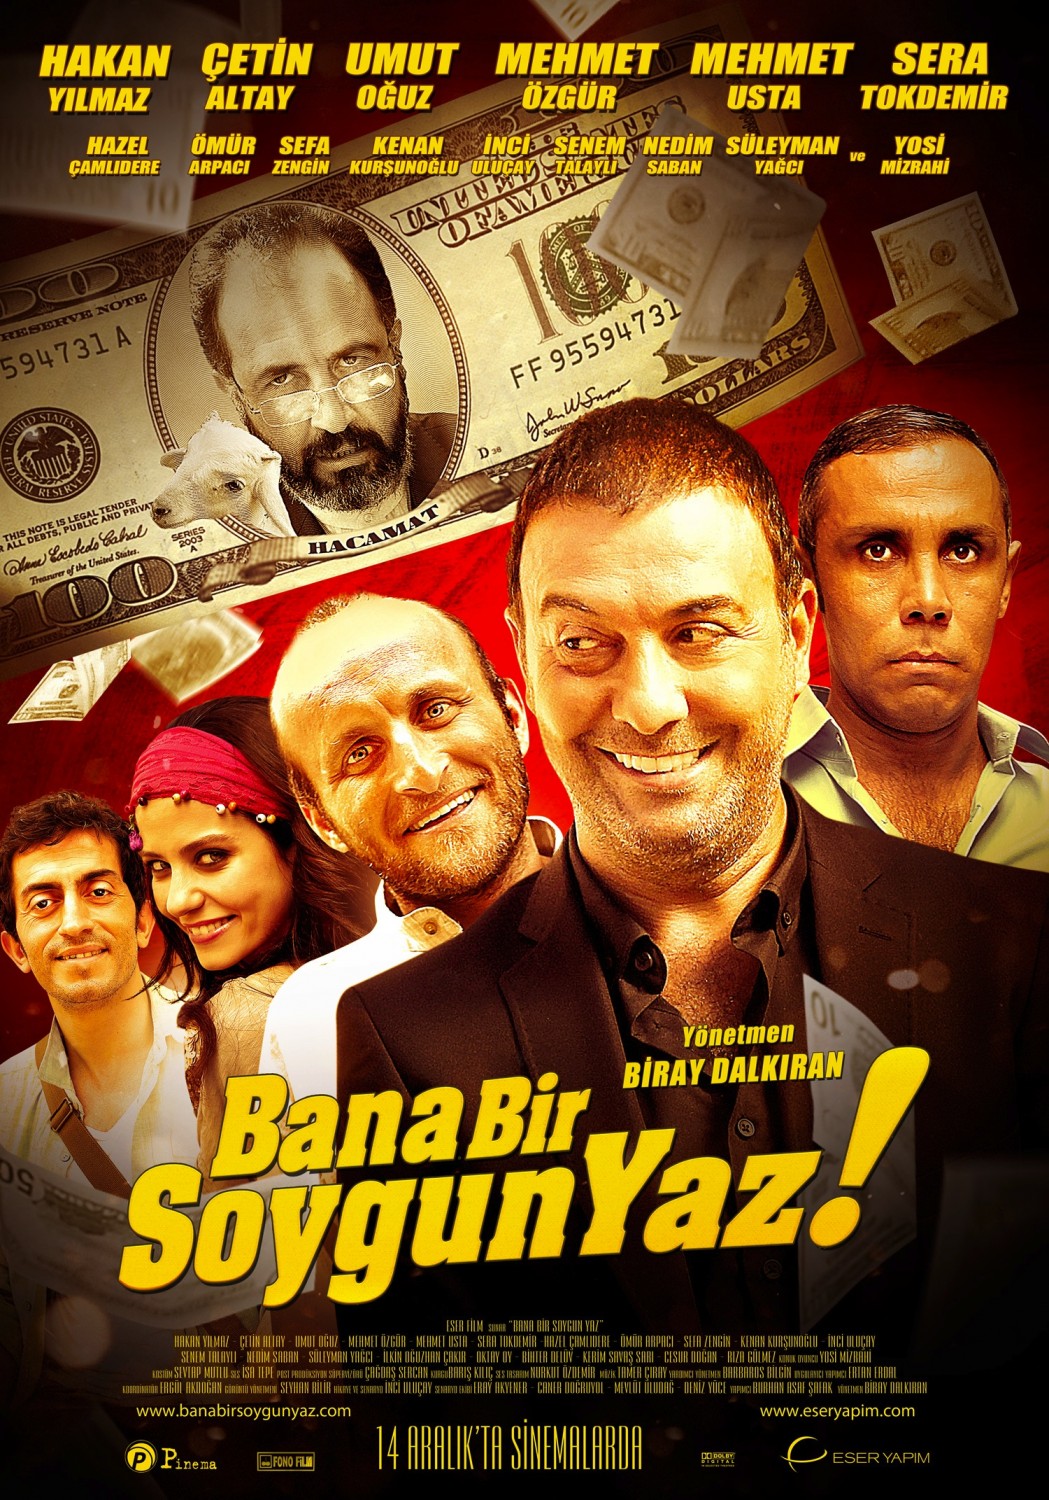 Extra Large Movie Poster Image for Bana Bir Soygun Yaz 